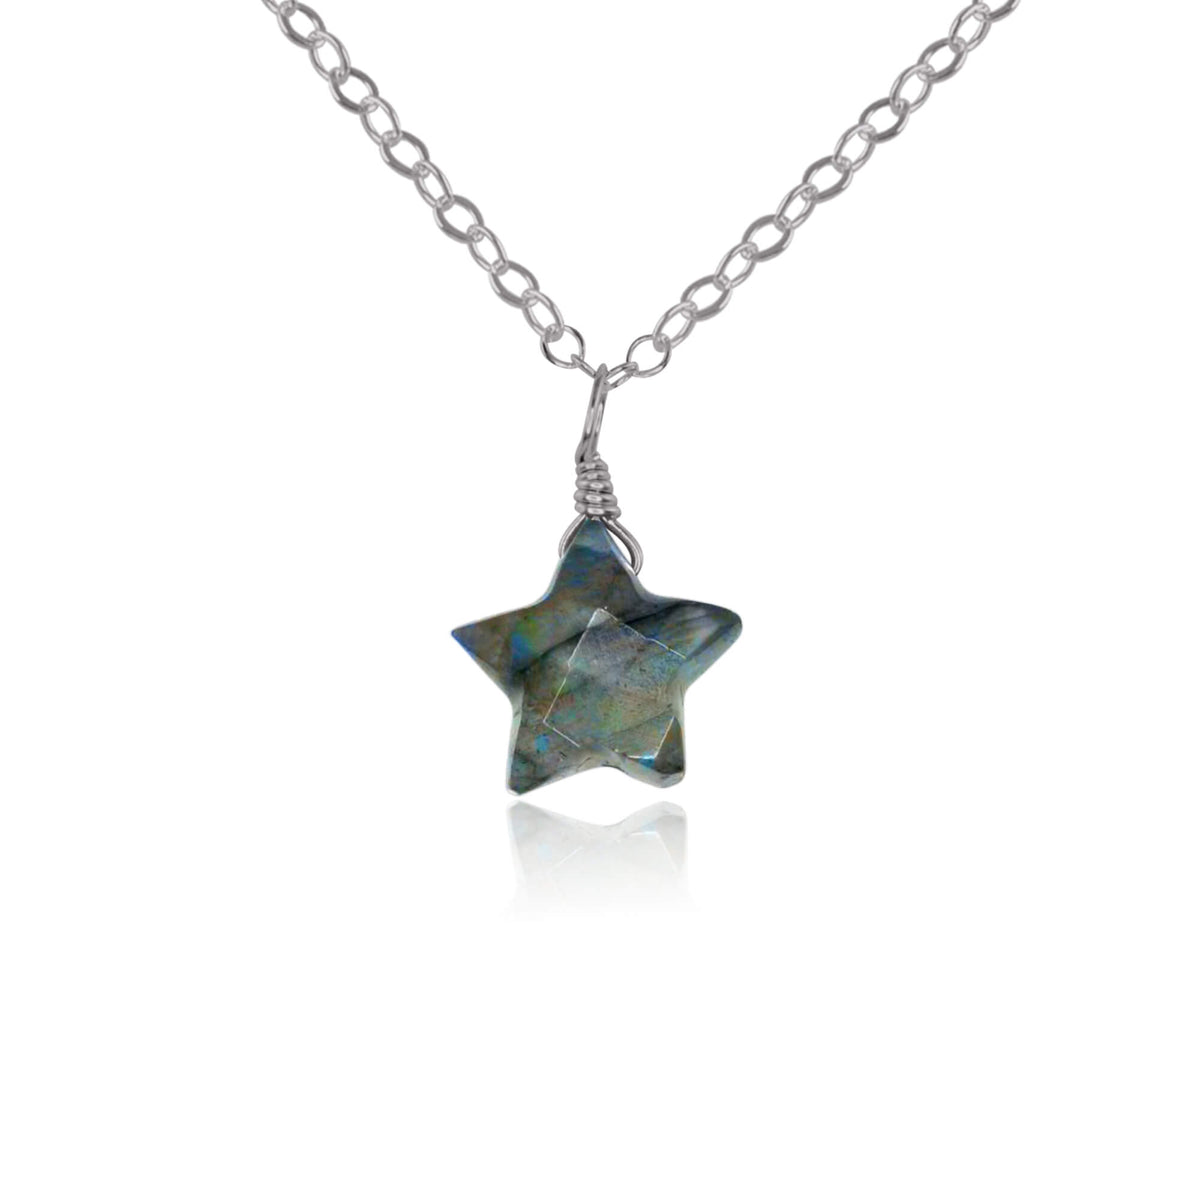 Crystal Star Pendant Necklace - Labradorite - Stainless Steel - Luna Tide Handmade Jewellery